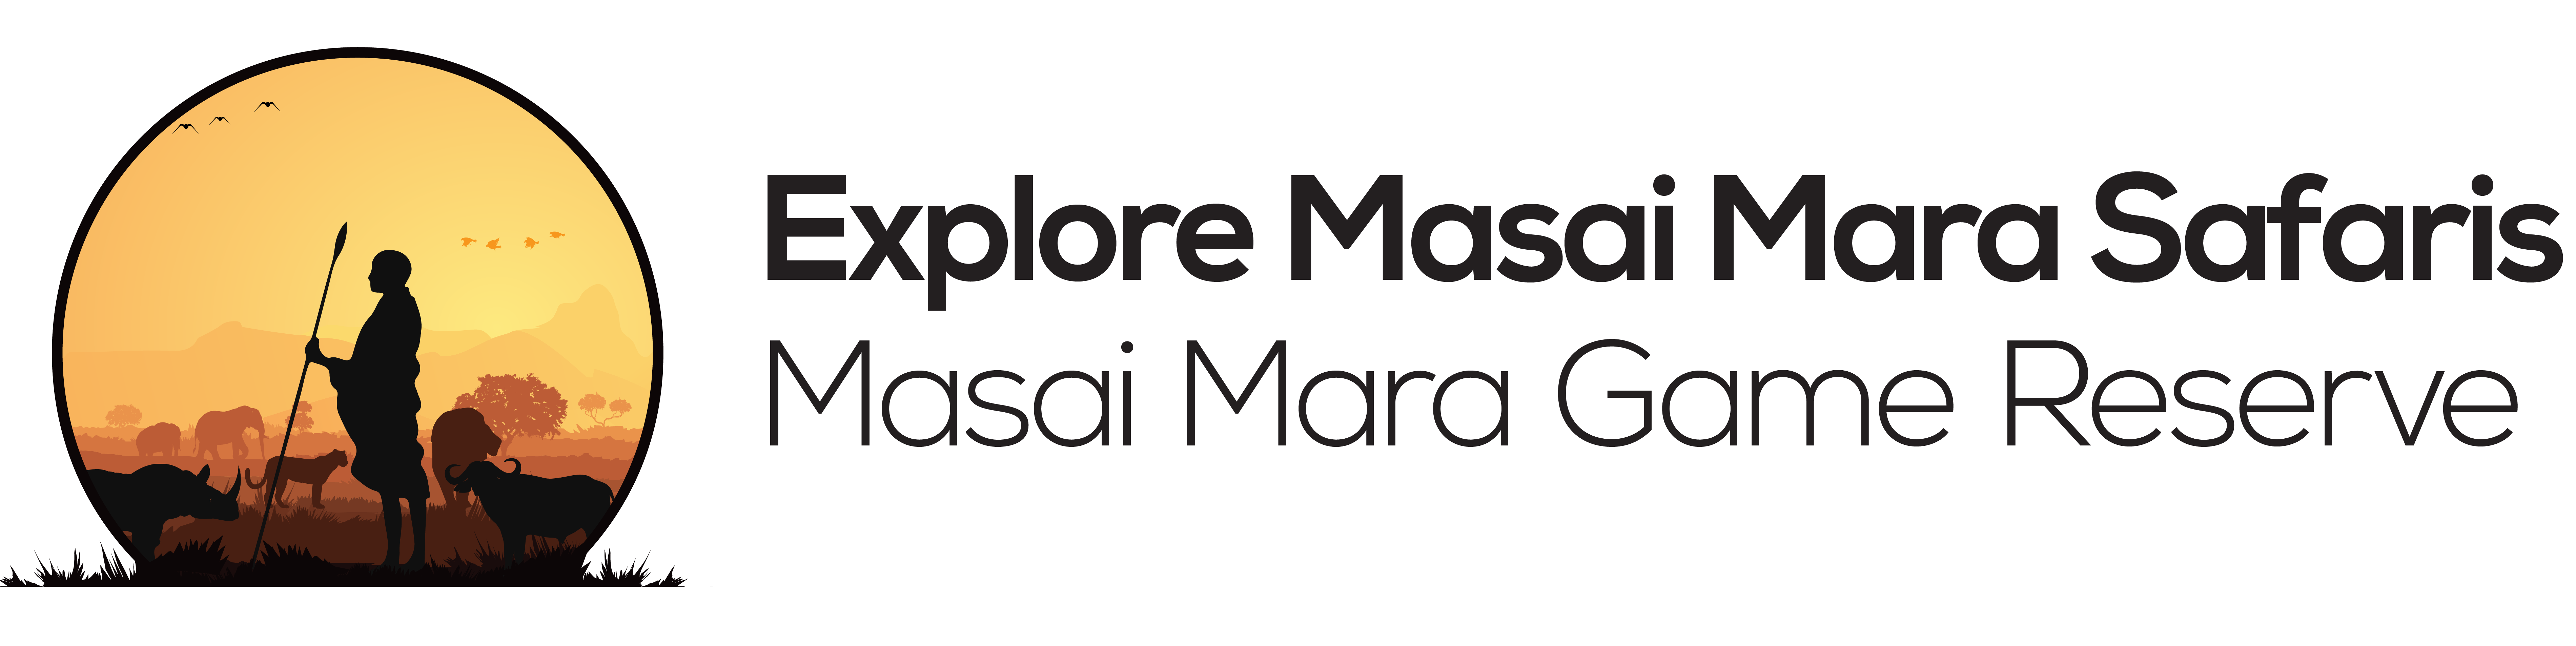 Explore masai mara | 5 Days wildebeest migration & big 5 experience - Explore masai mara